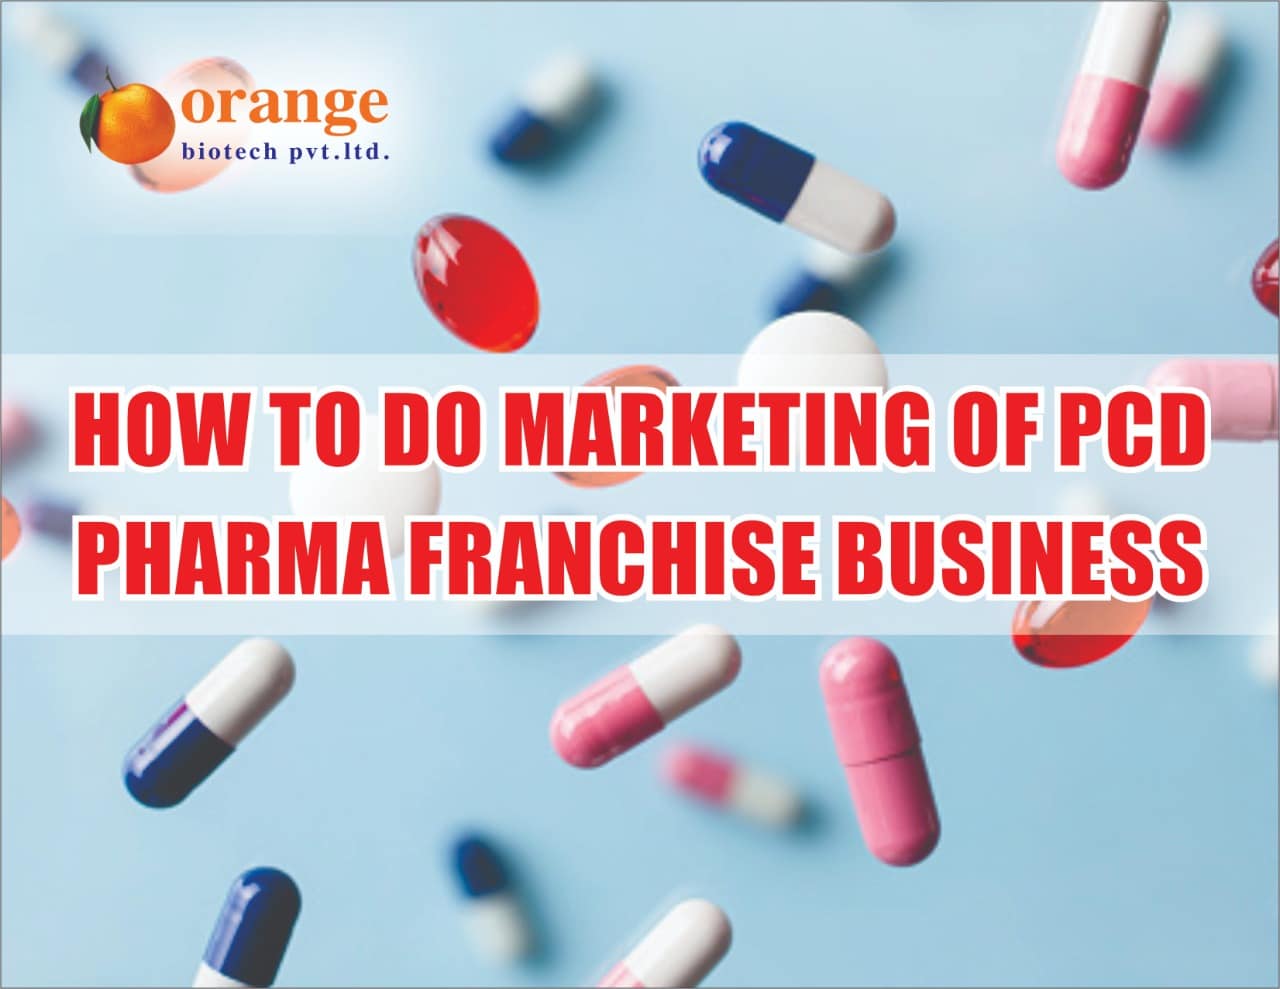 How to do marketing of PCD pharma franchise business ( Orange Biotech )